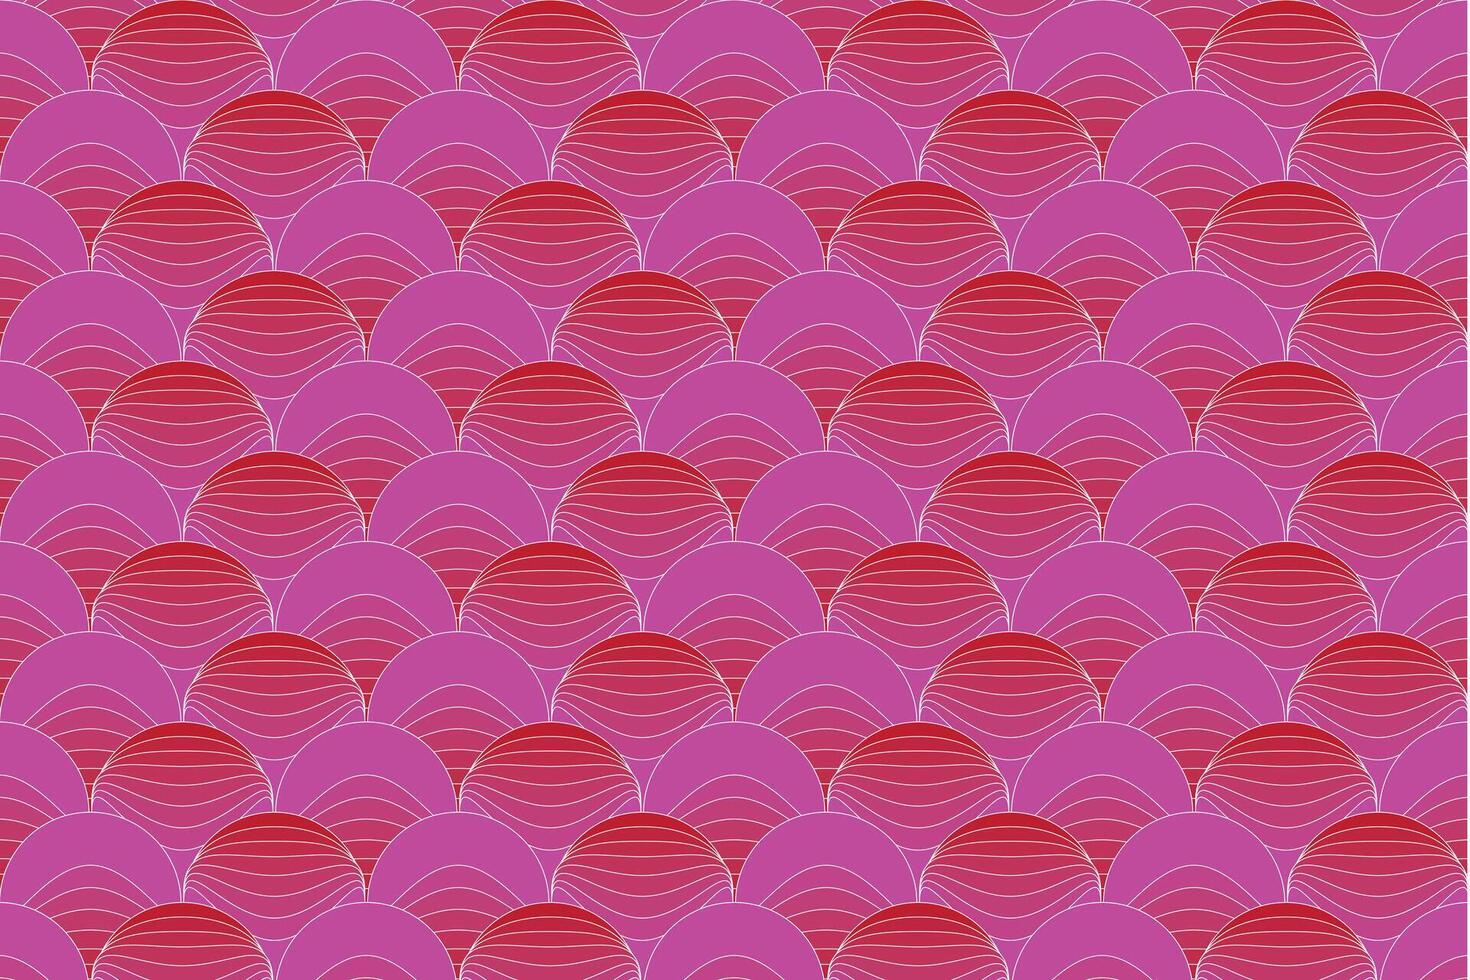 illustration tapet, mönster lager av rosa cirkel bakgrund. vektor